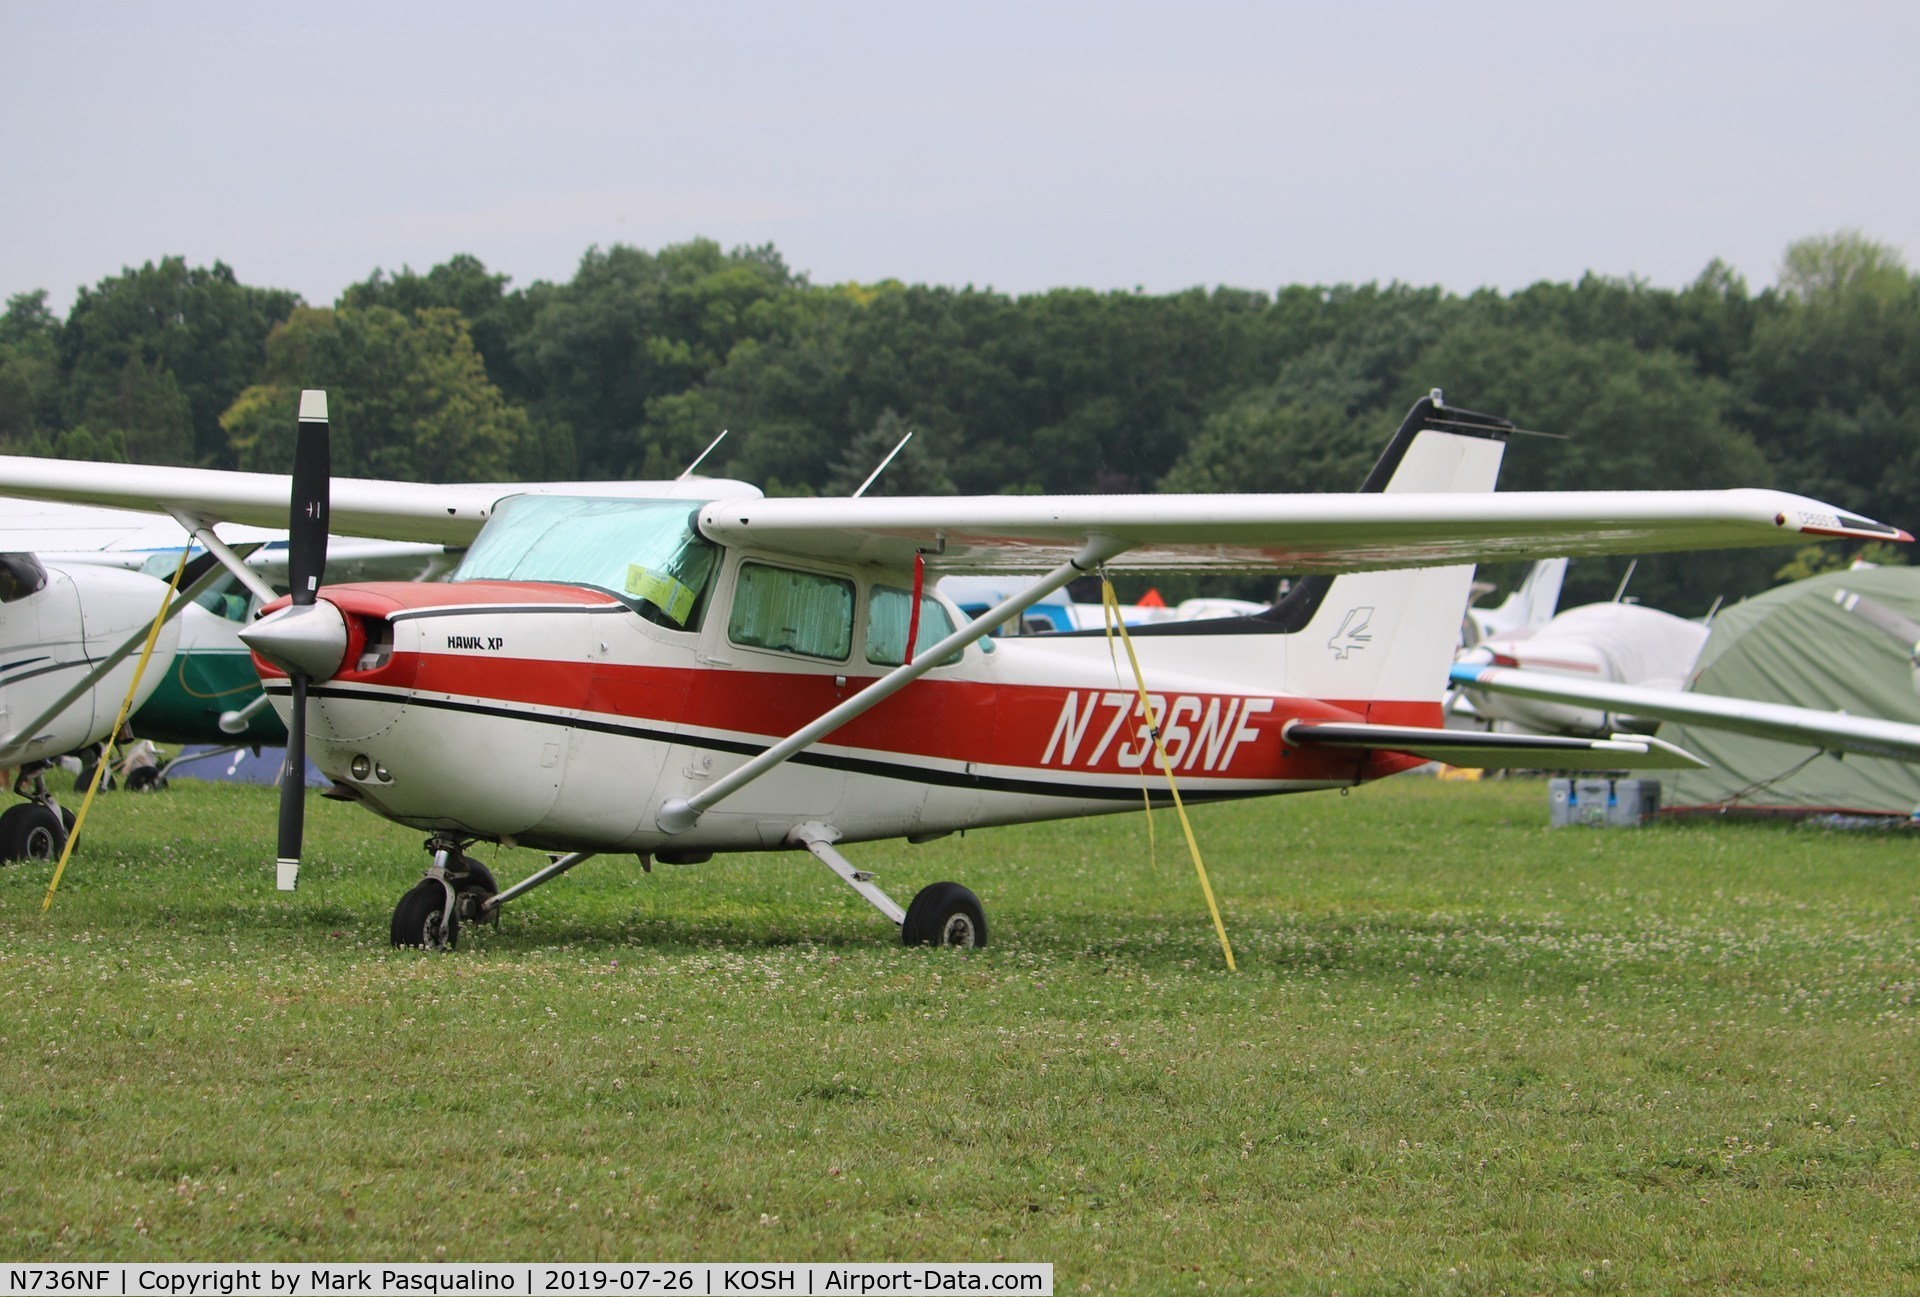 N736NF, 1977 Cessna R172K Hawk XP C/N R1722652, Cessna R172K